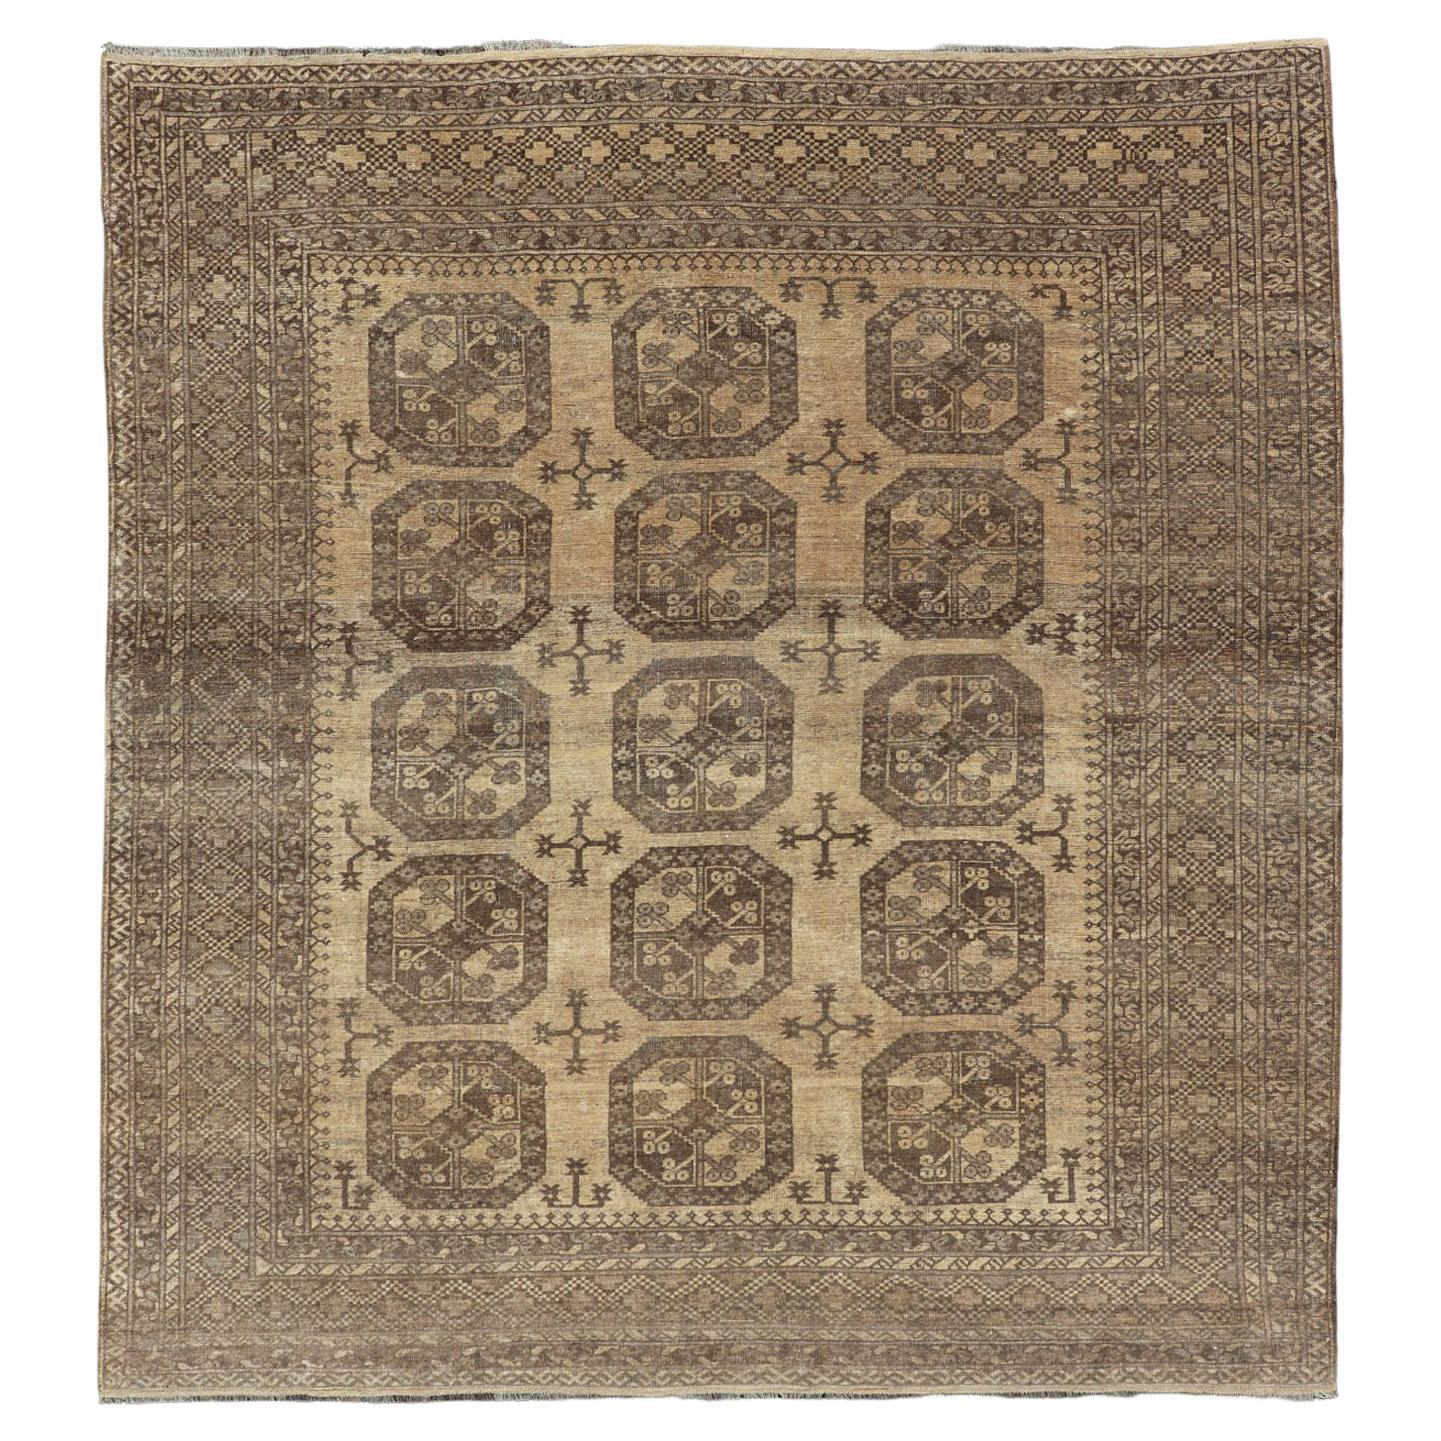 Vintage Turkomen Ersari Rug with Gul Design in Brown, Gray, Tan & Sand Colors